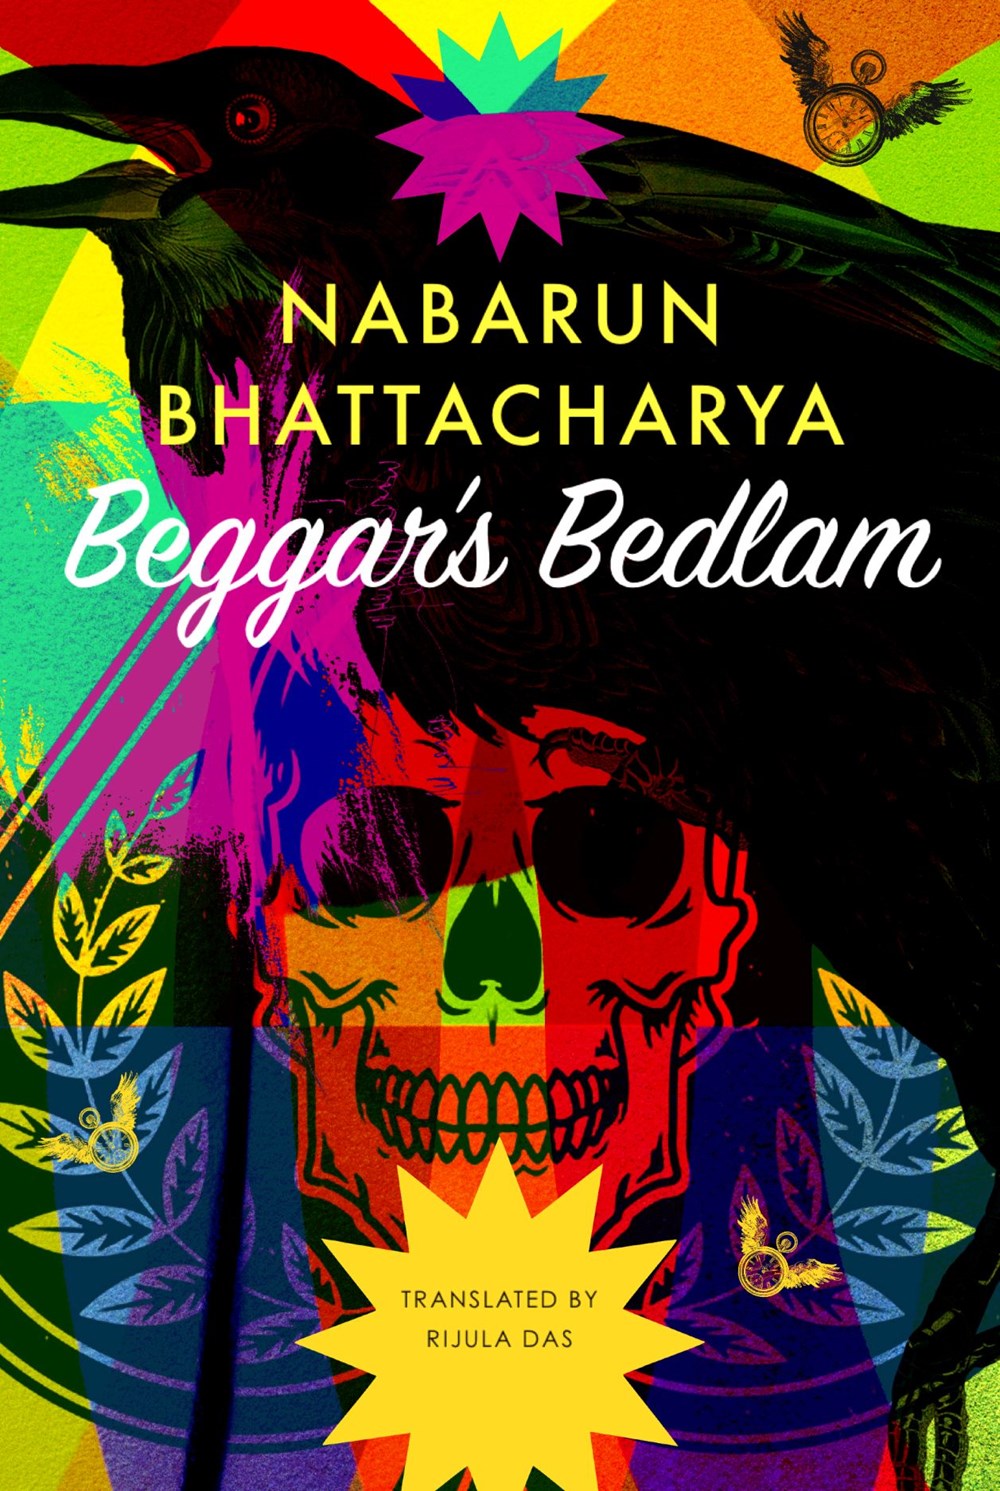 Beggar's Bedlam by Nabarun Bhattacharya (Hardcover) (PREORDER)